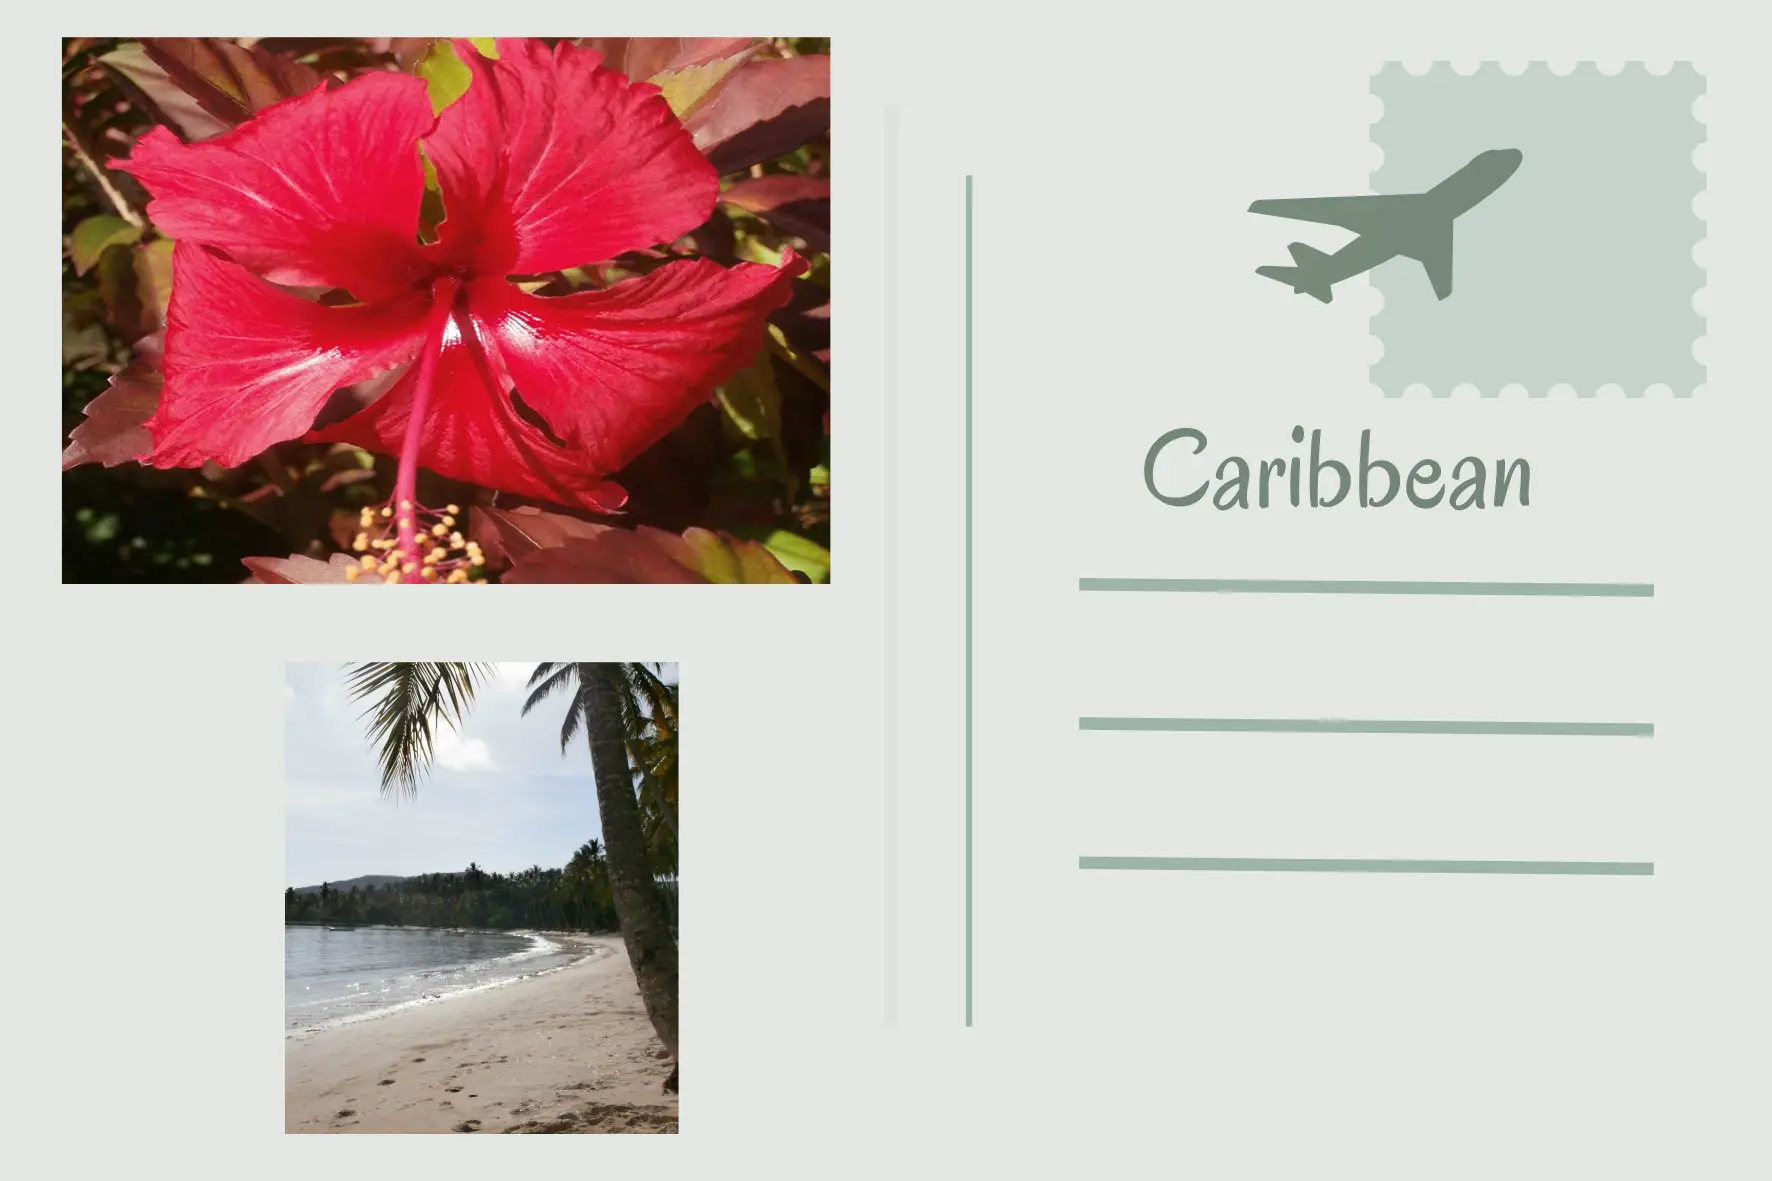 Caribbean Postcard